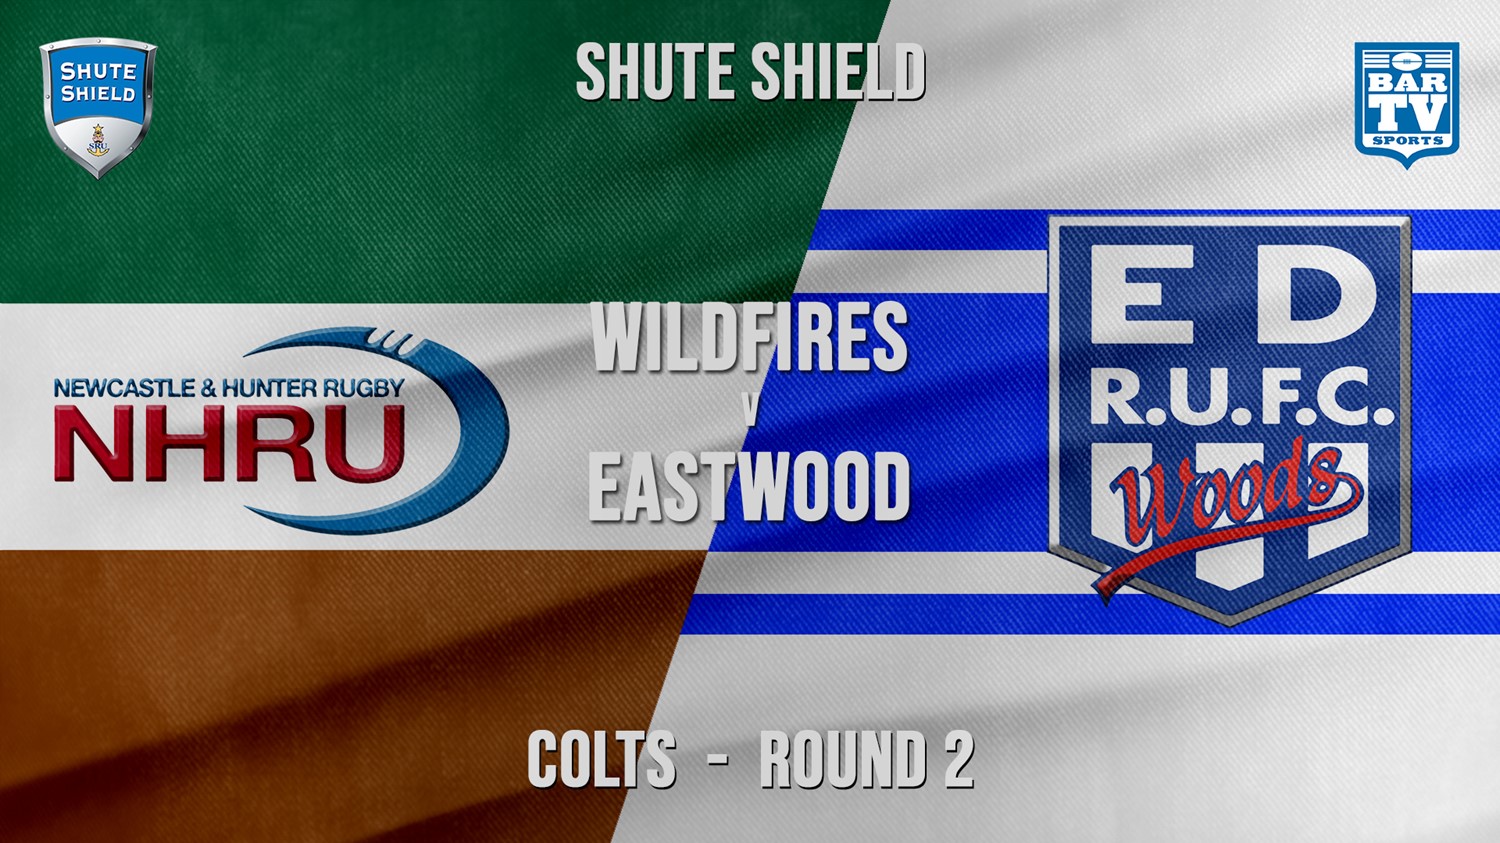 Shute Shield Colts - Round 2 - NHRU Wildfires v Eastwood Minigame Slate Image